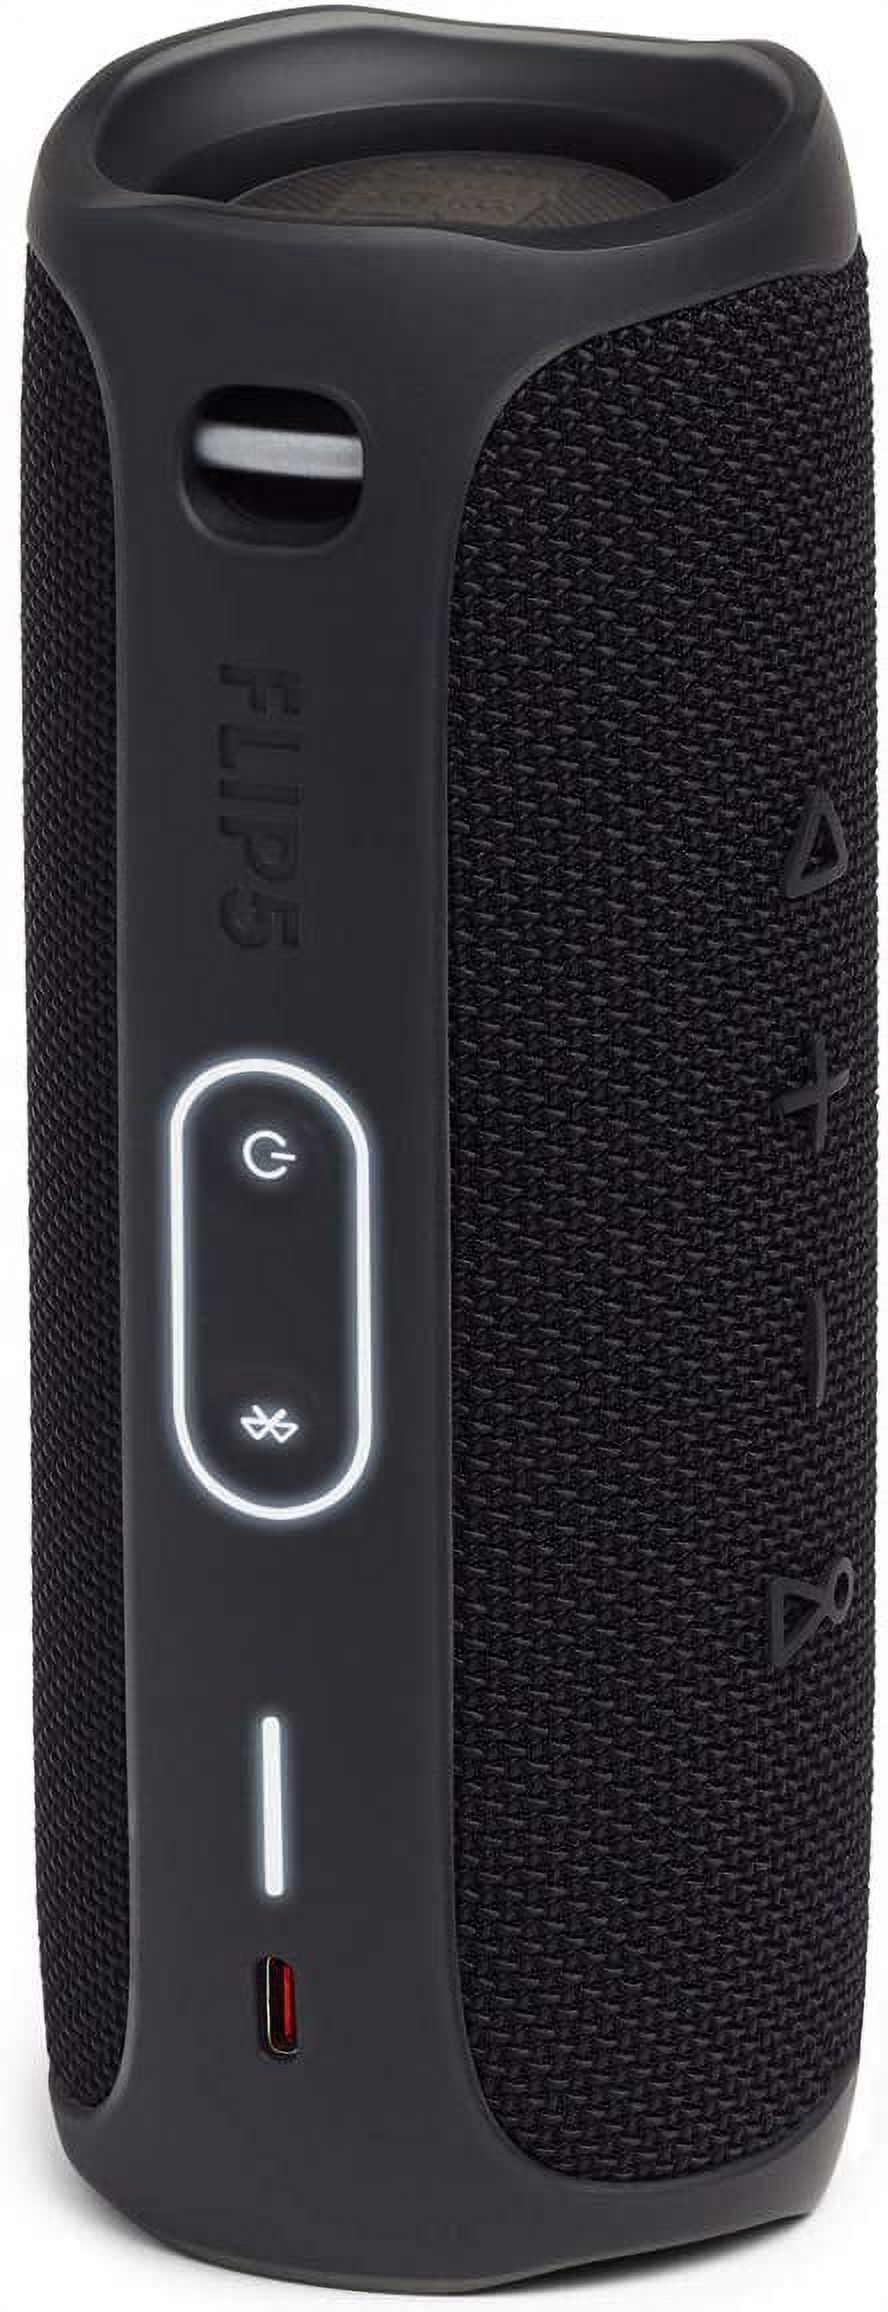 JBL Flip 5 Portable Waterproof Wireless Bluetooth Speaker - Black - image 3 of 4